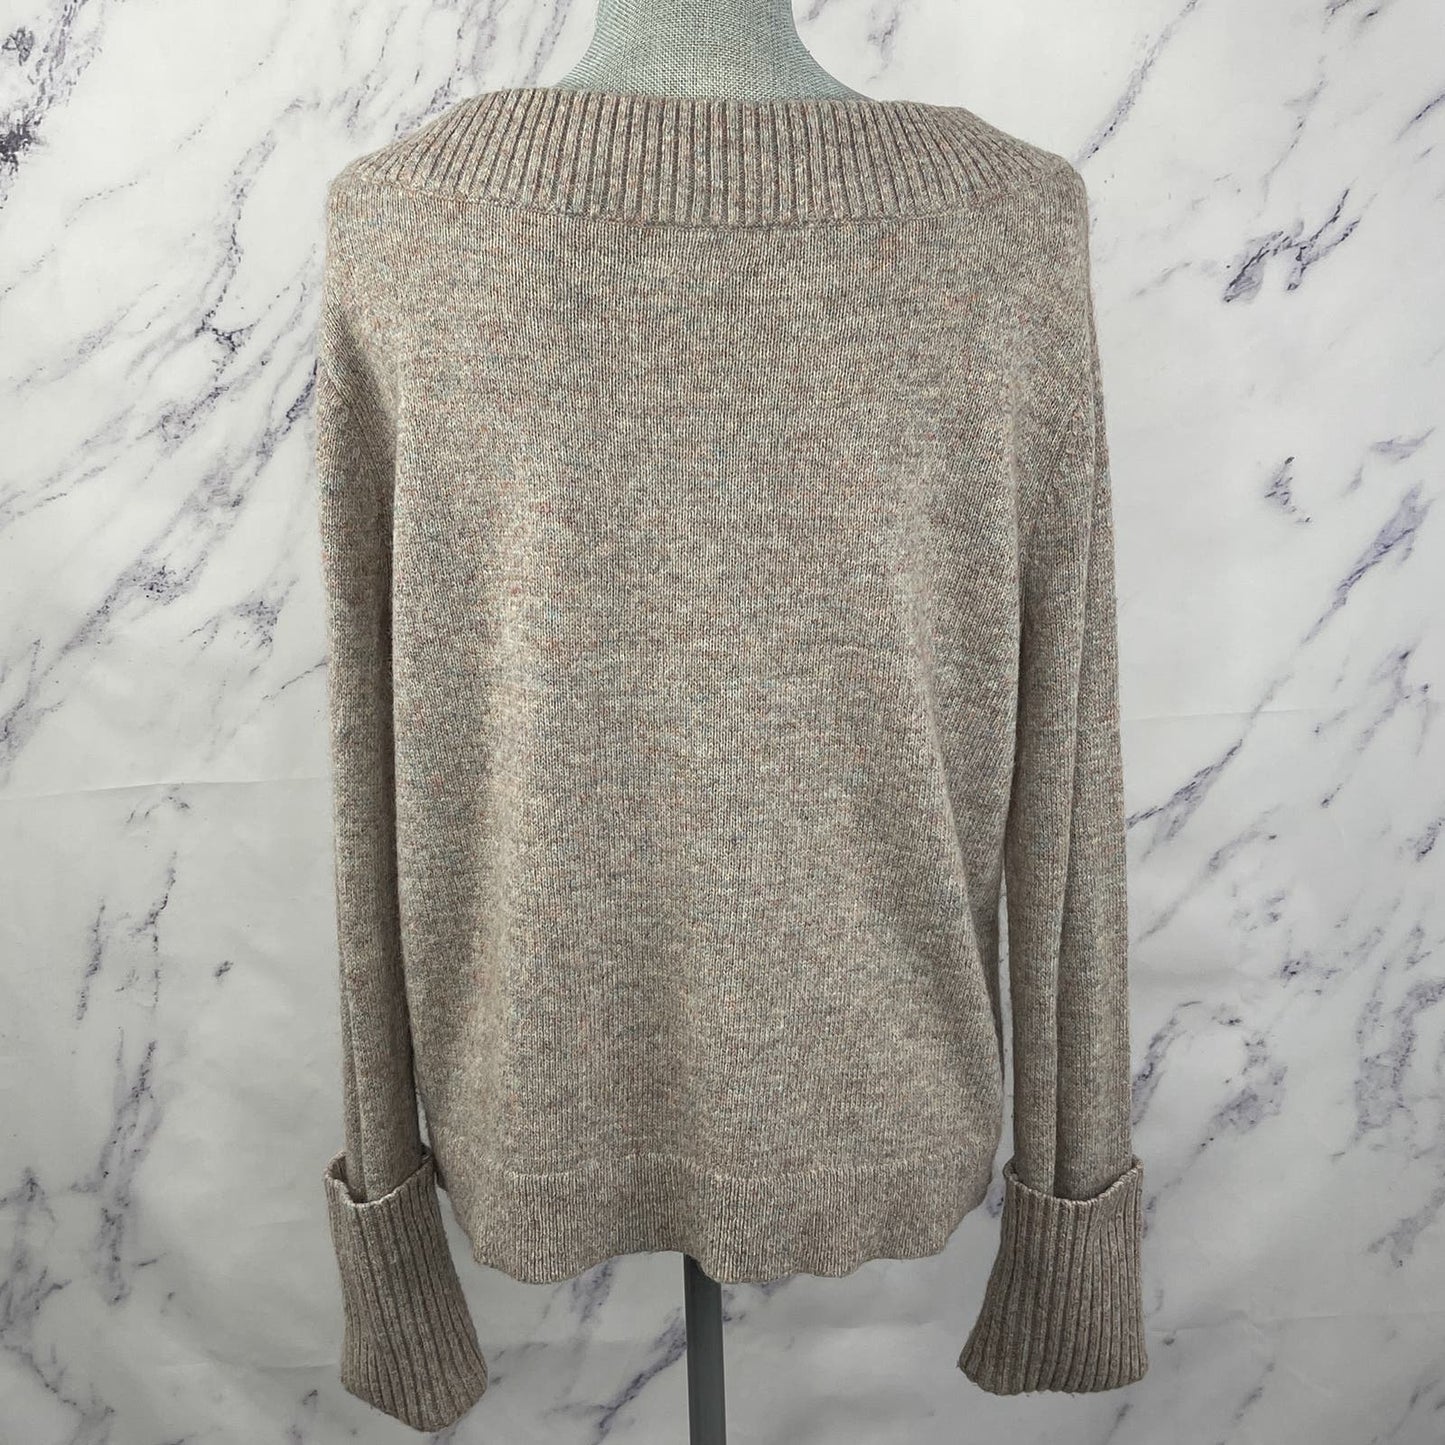 Club Monaco | Wool/ Mohair Blend Tan Sweater | S